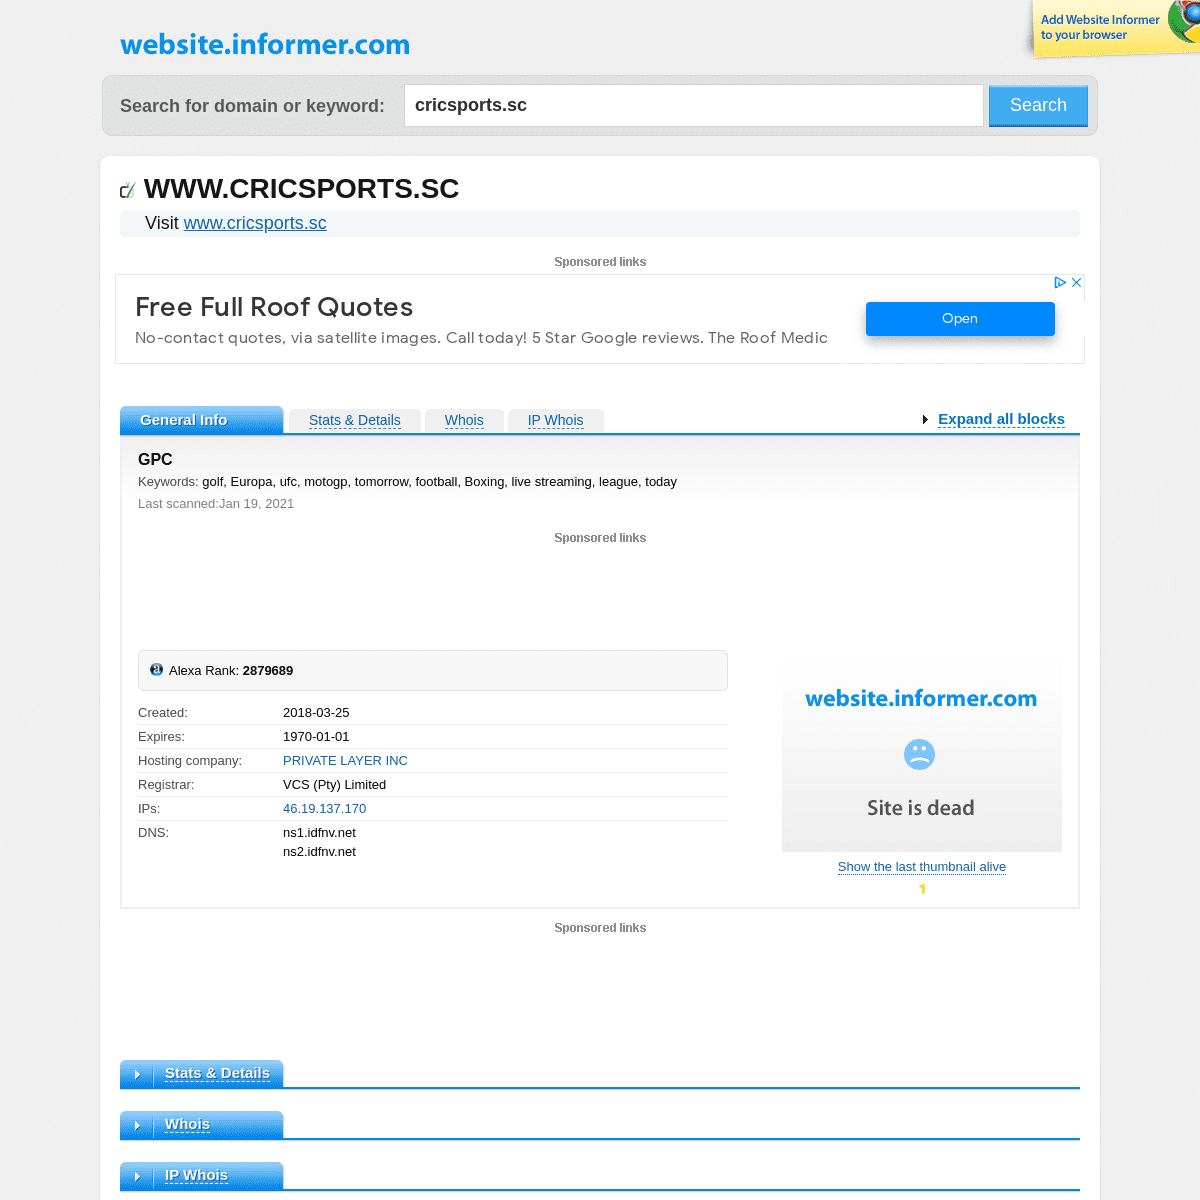 A complete backup of https://website.informer.com/cricsports.sc